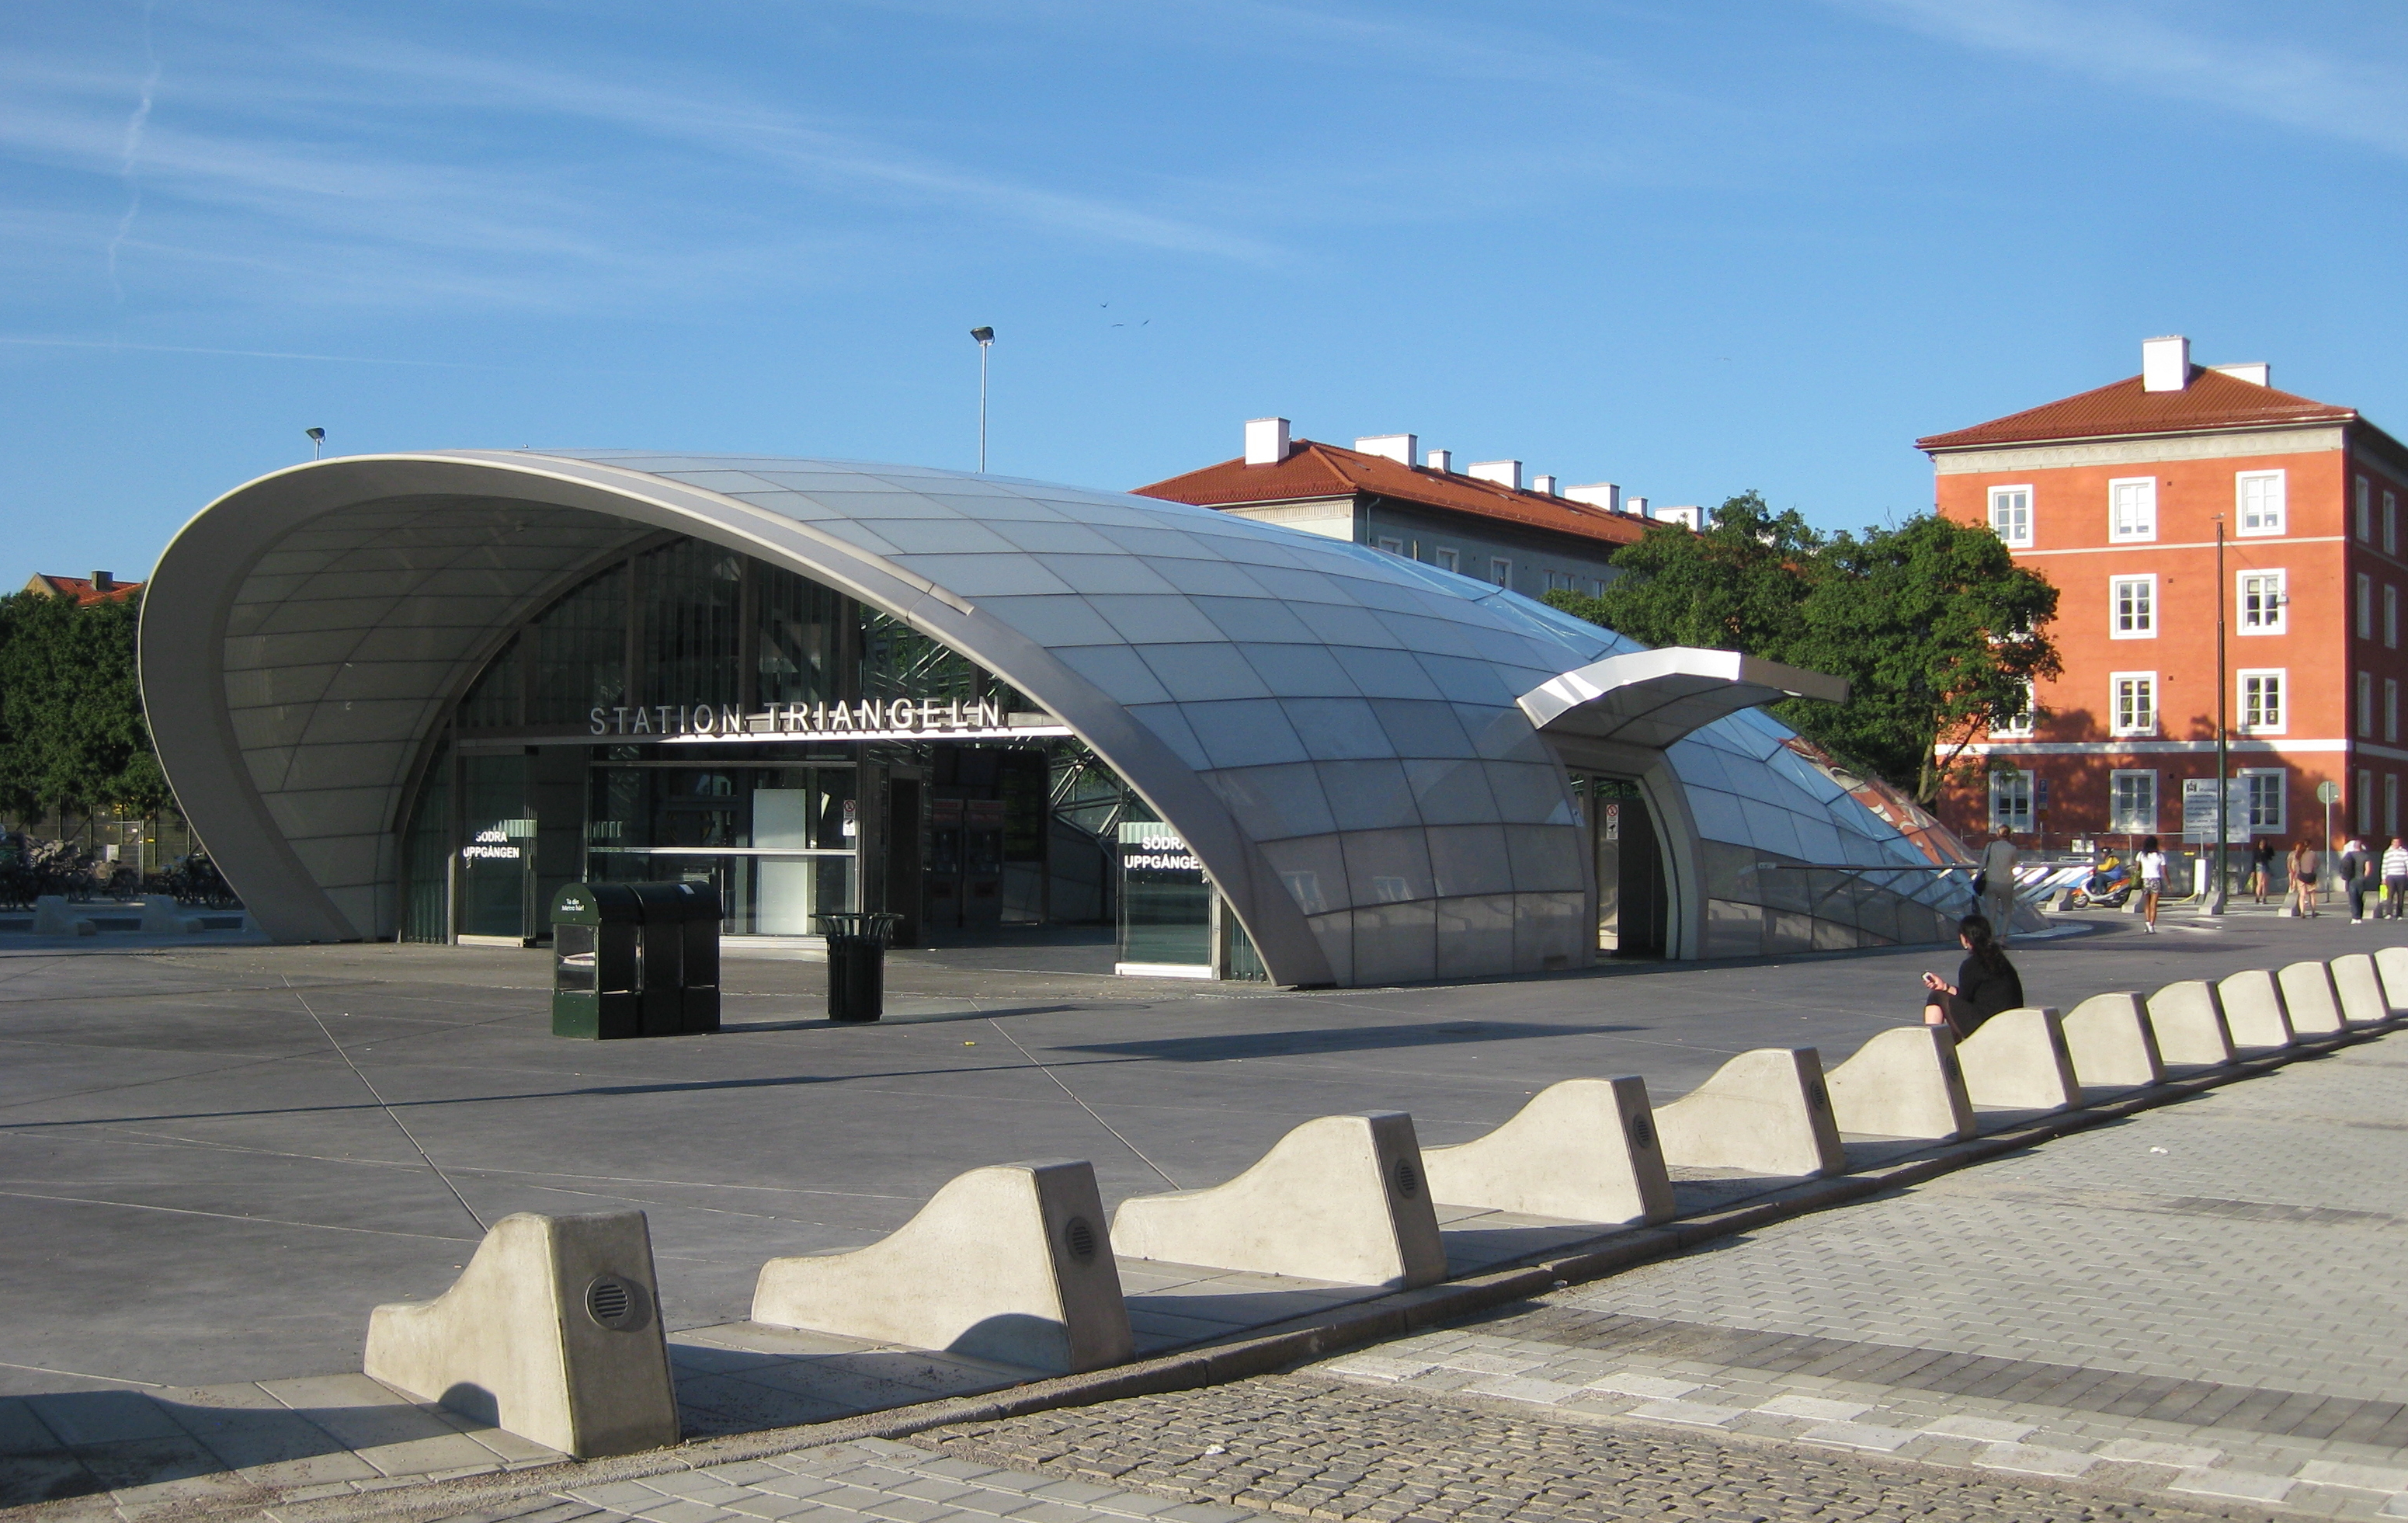 Station Triangeln, Malmö. 